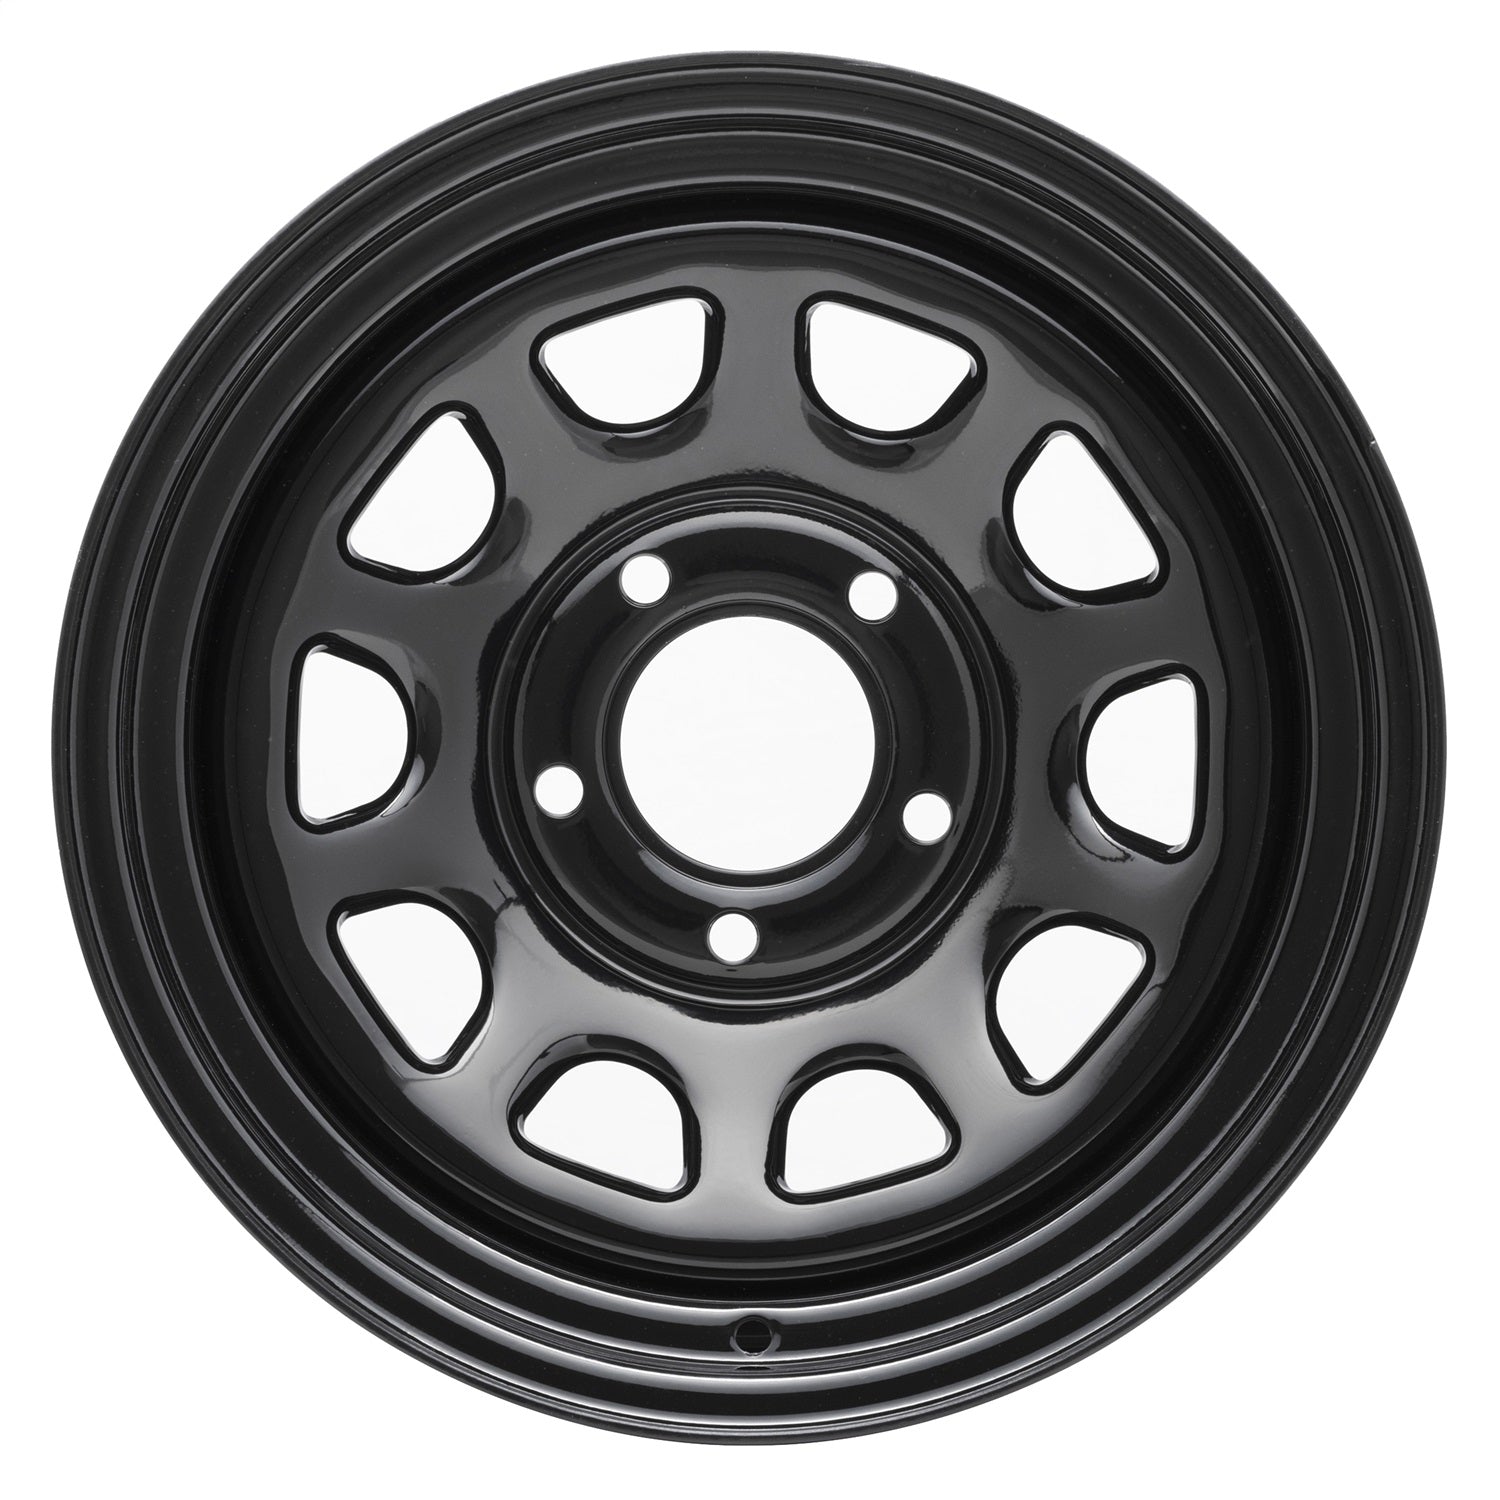 Pro Comp Wheels 51-7973 Rock Crawler Series 51 Black Wheel